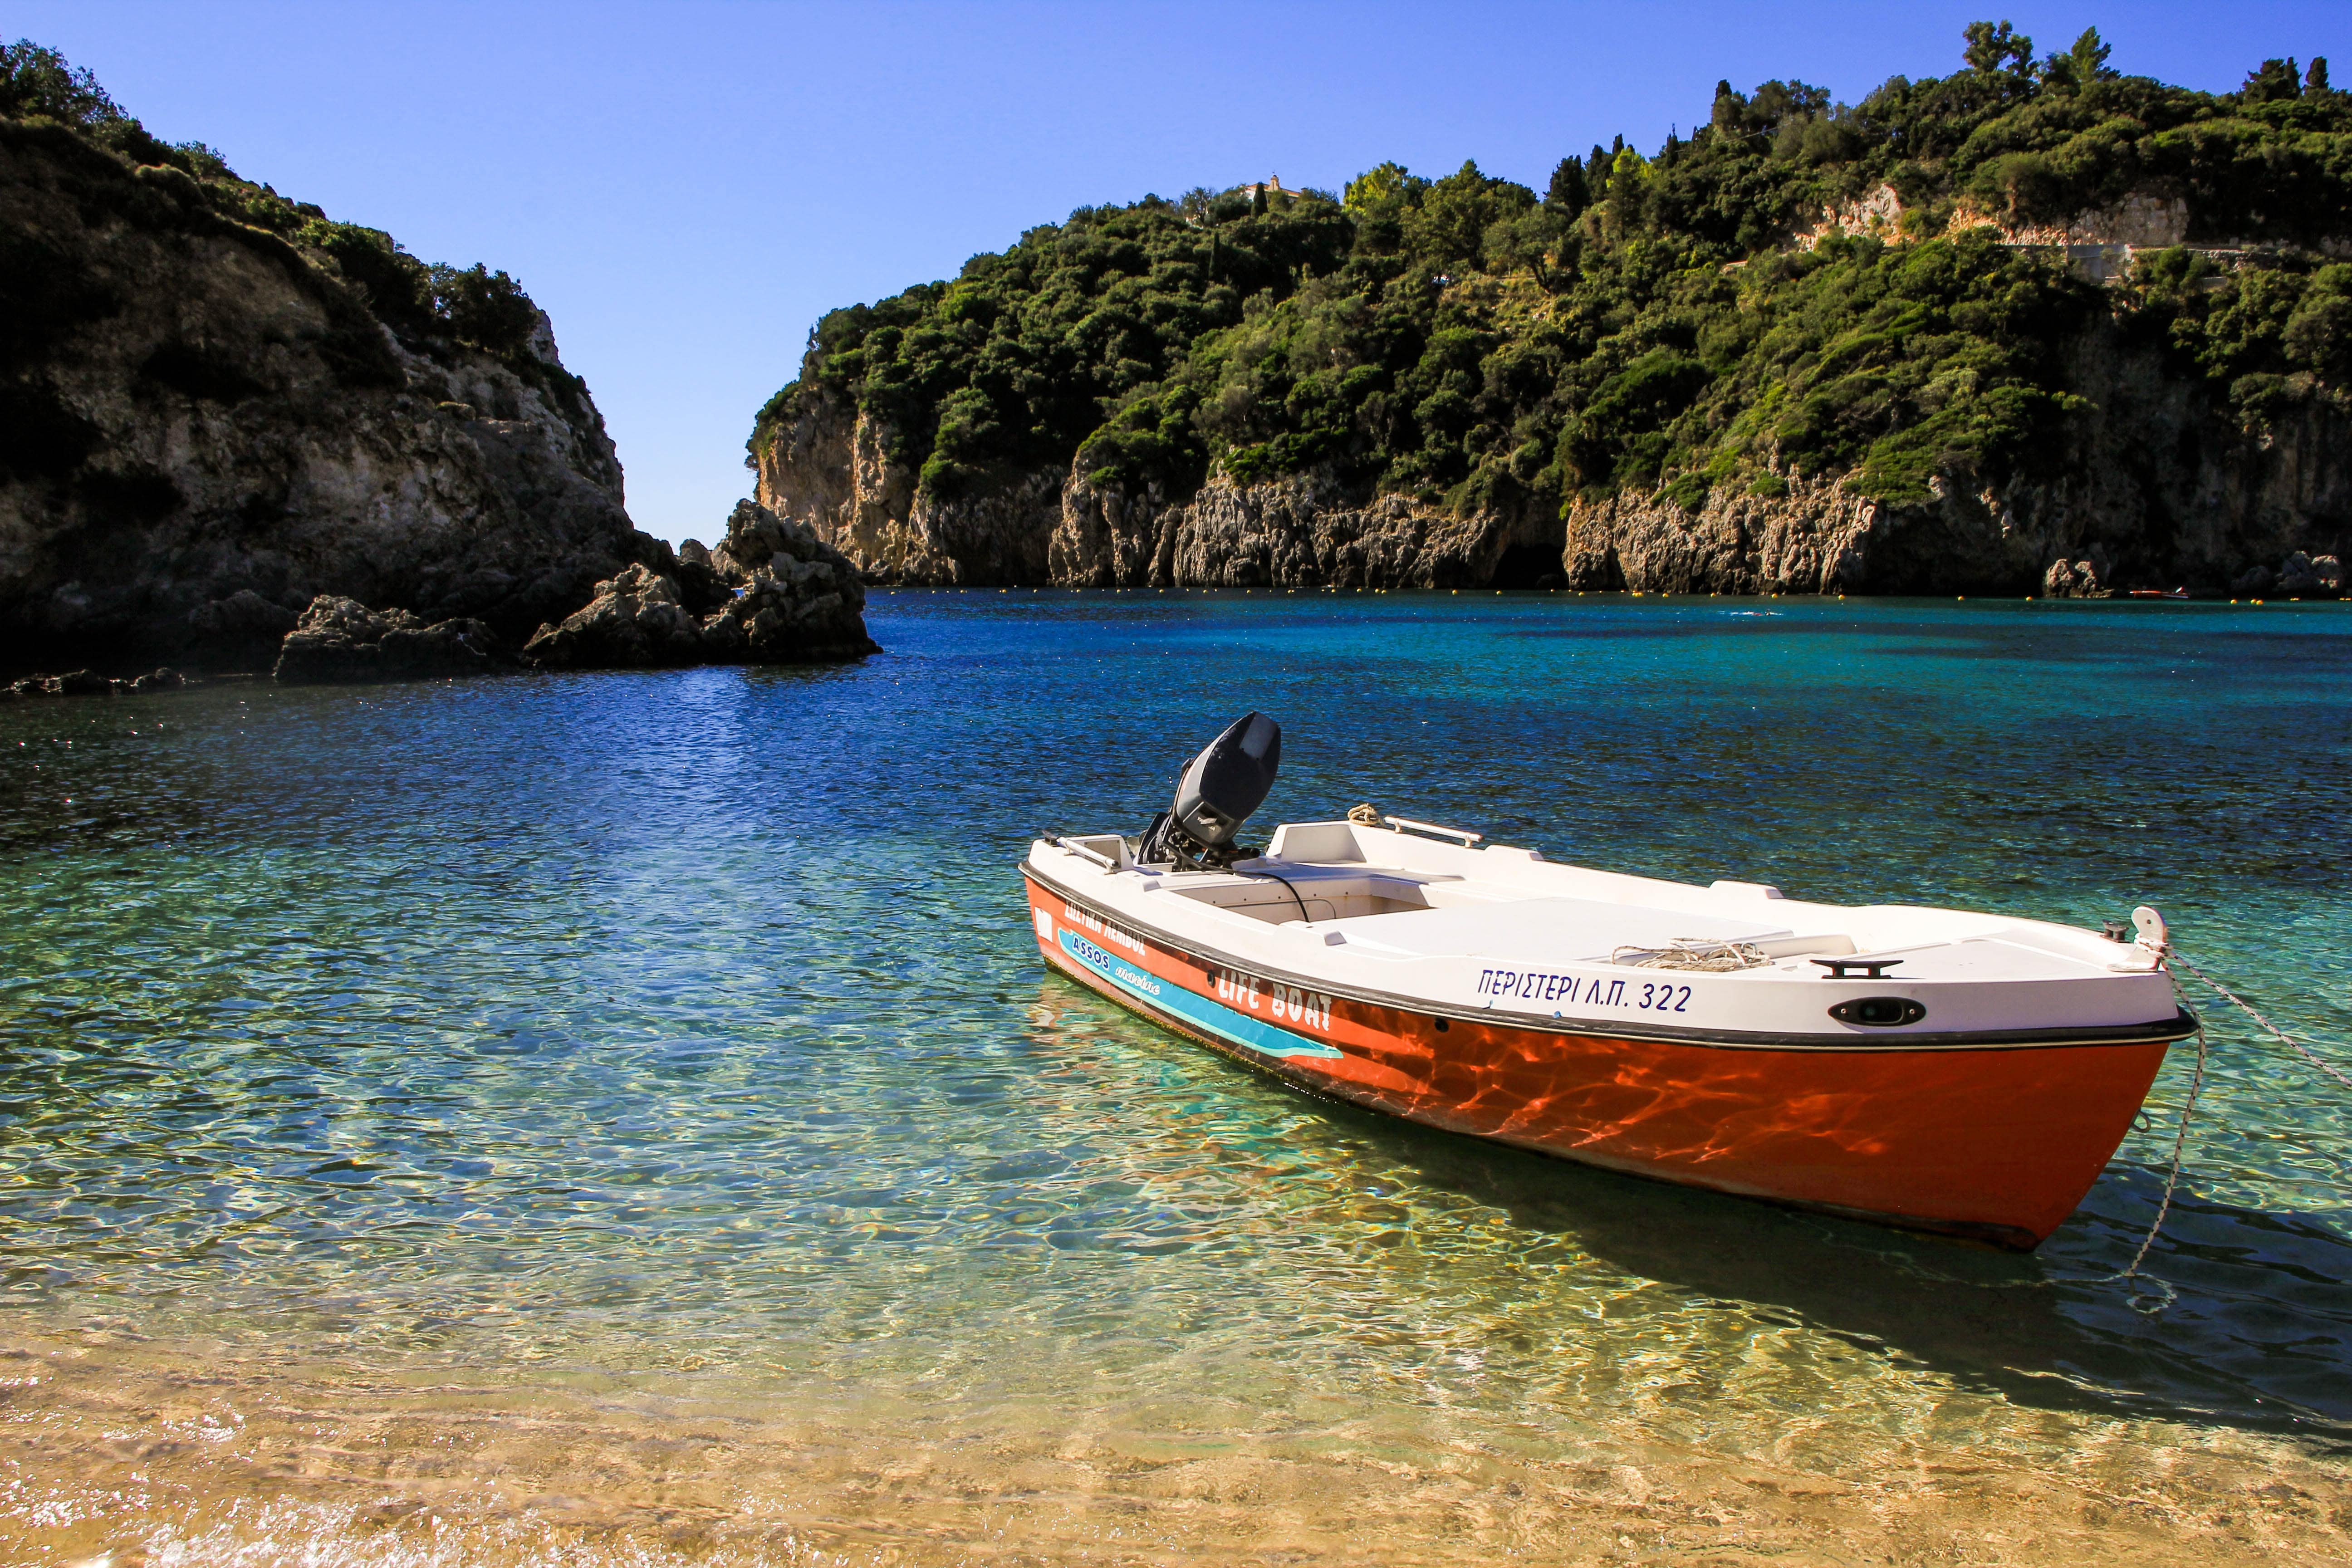 Stock image - Boat in a clear water coastal bay in Corfu, Greece - Photo by Major Wave on Unsplash